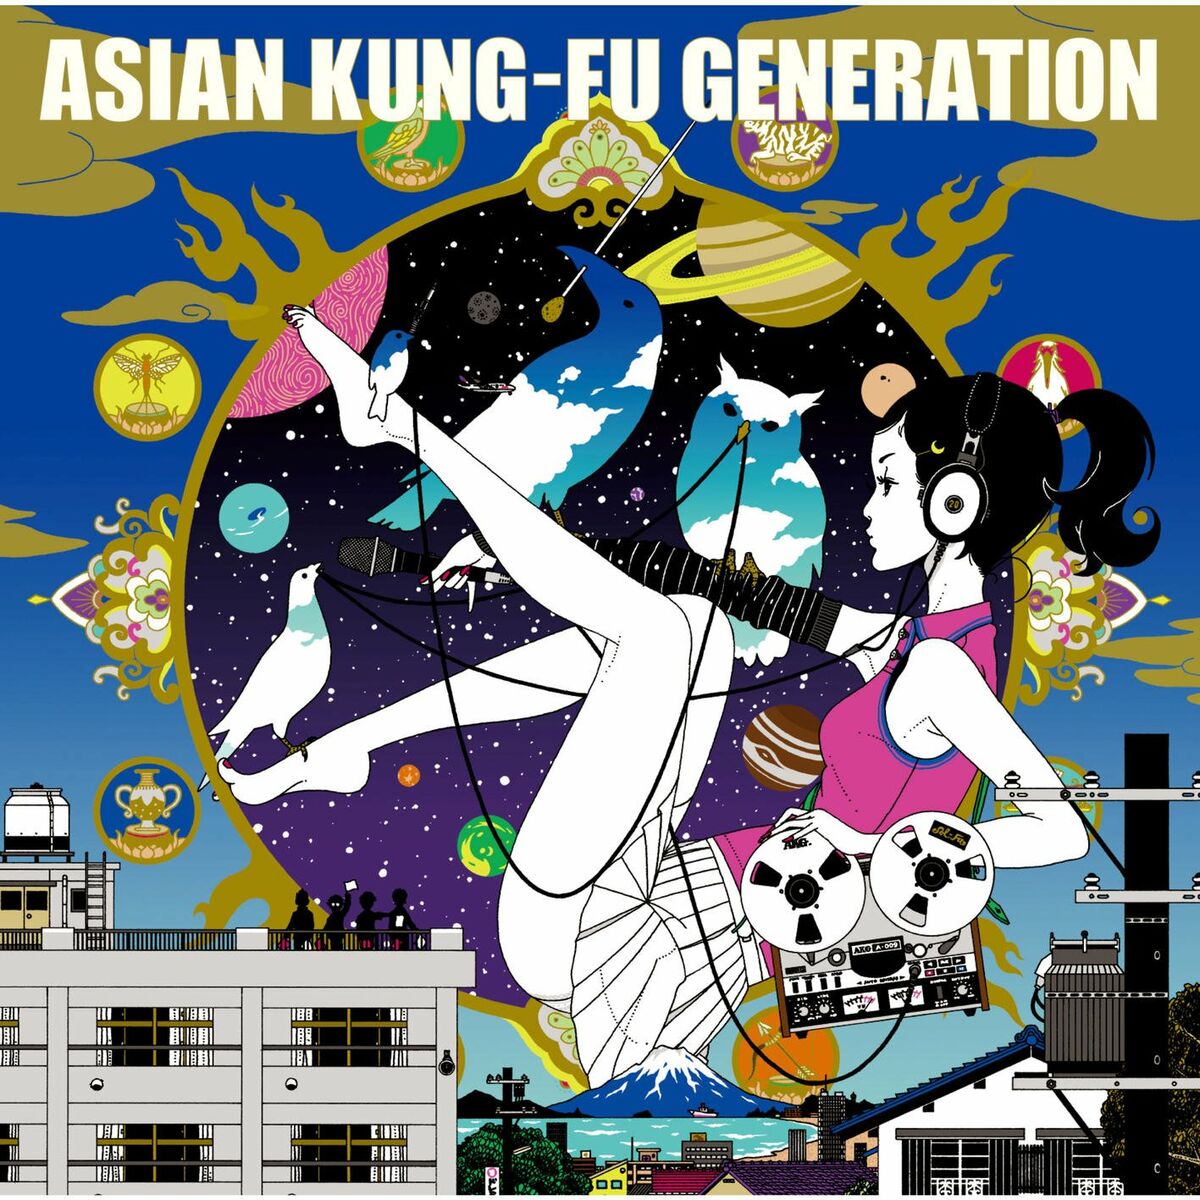 Asian Kung-Fu Generation: albums, songs, playlists | Listen on Deezer